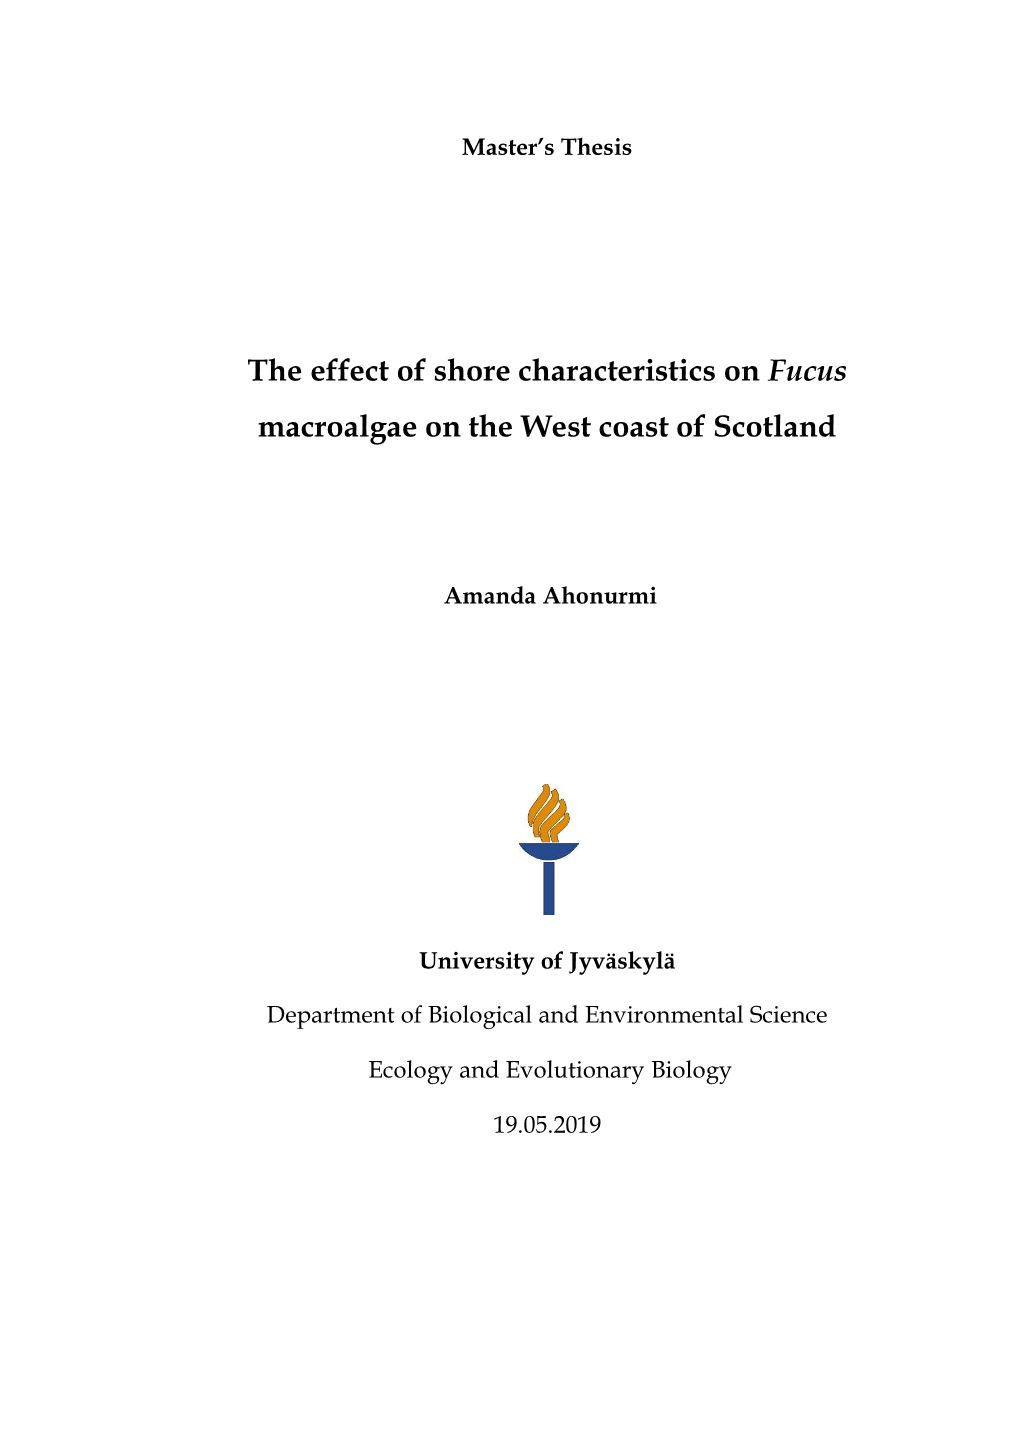 The Effect of Shore Characteristics on Fucus Macroalgae on the West Coast of Scotland